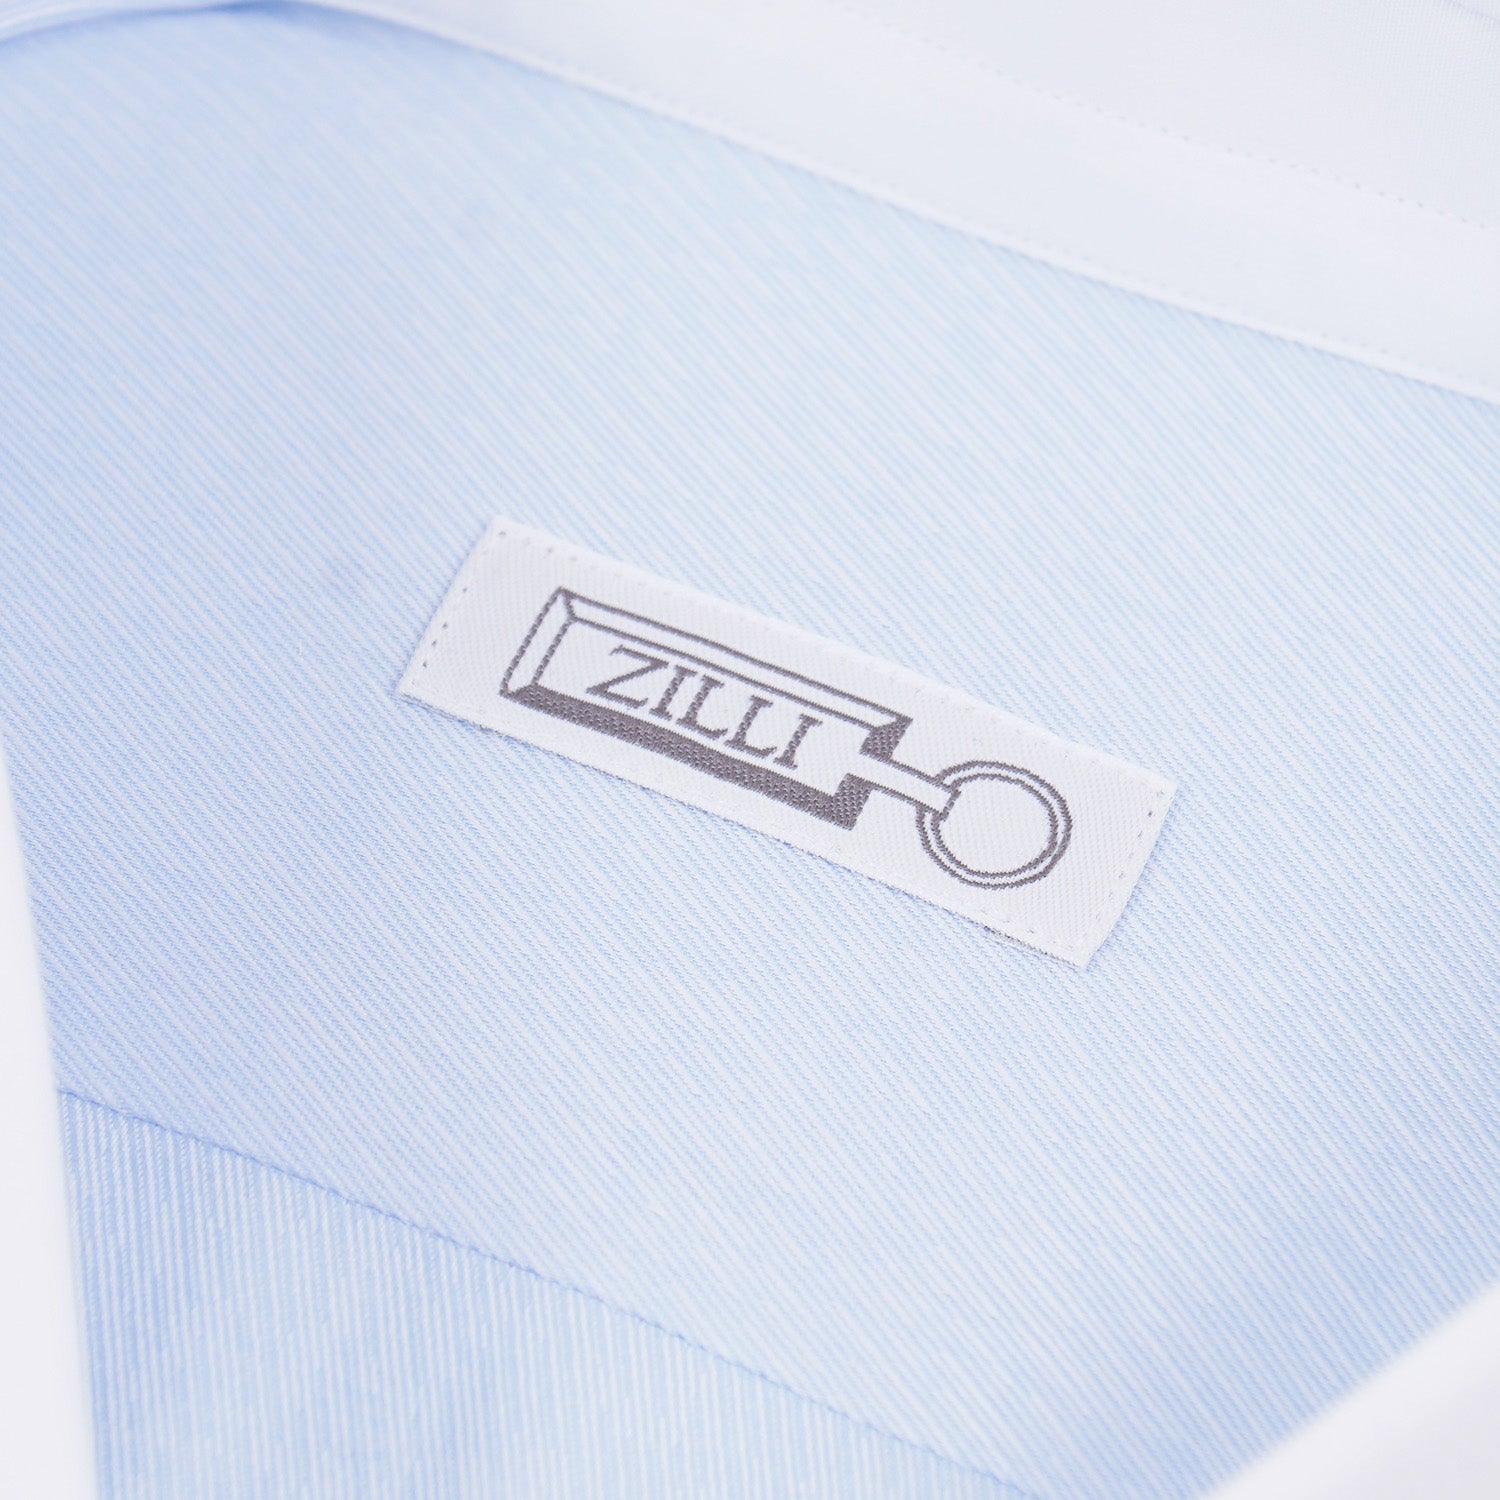 Zilli Dress Shirt with Contrasting Details - Top Shelf Apparel